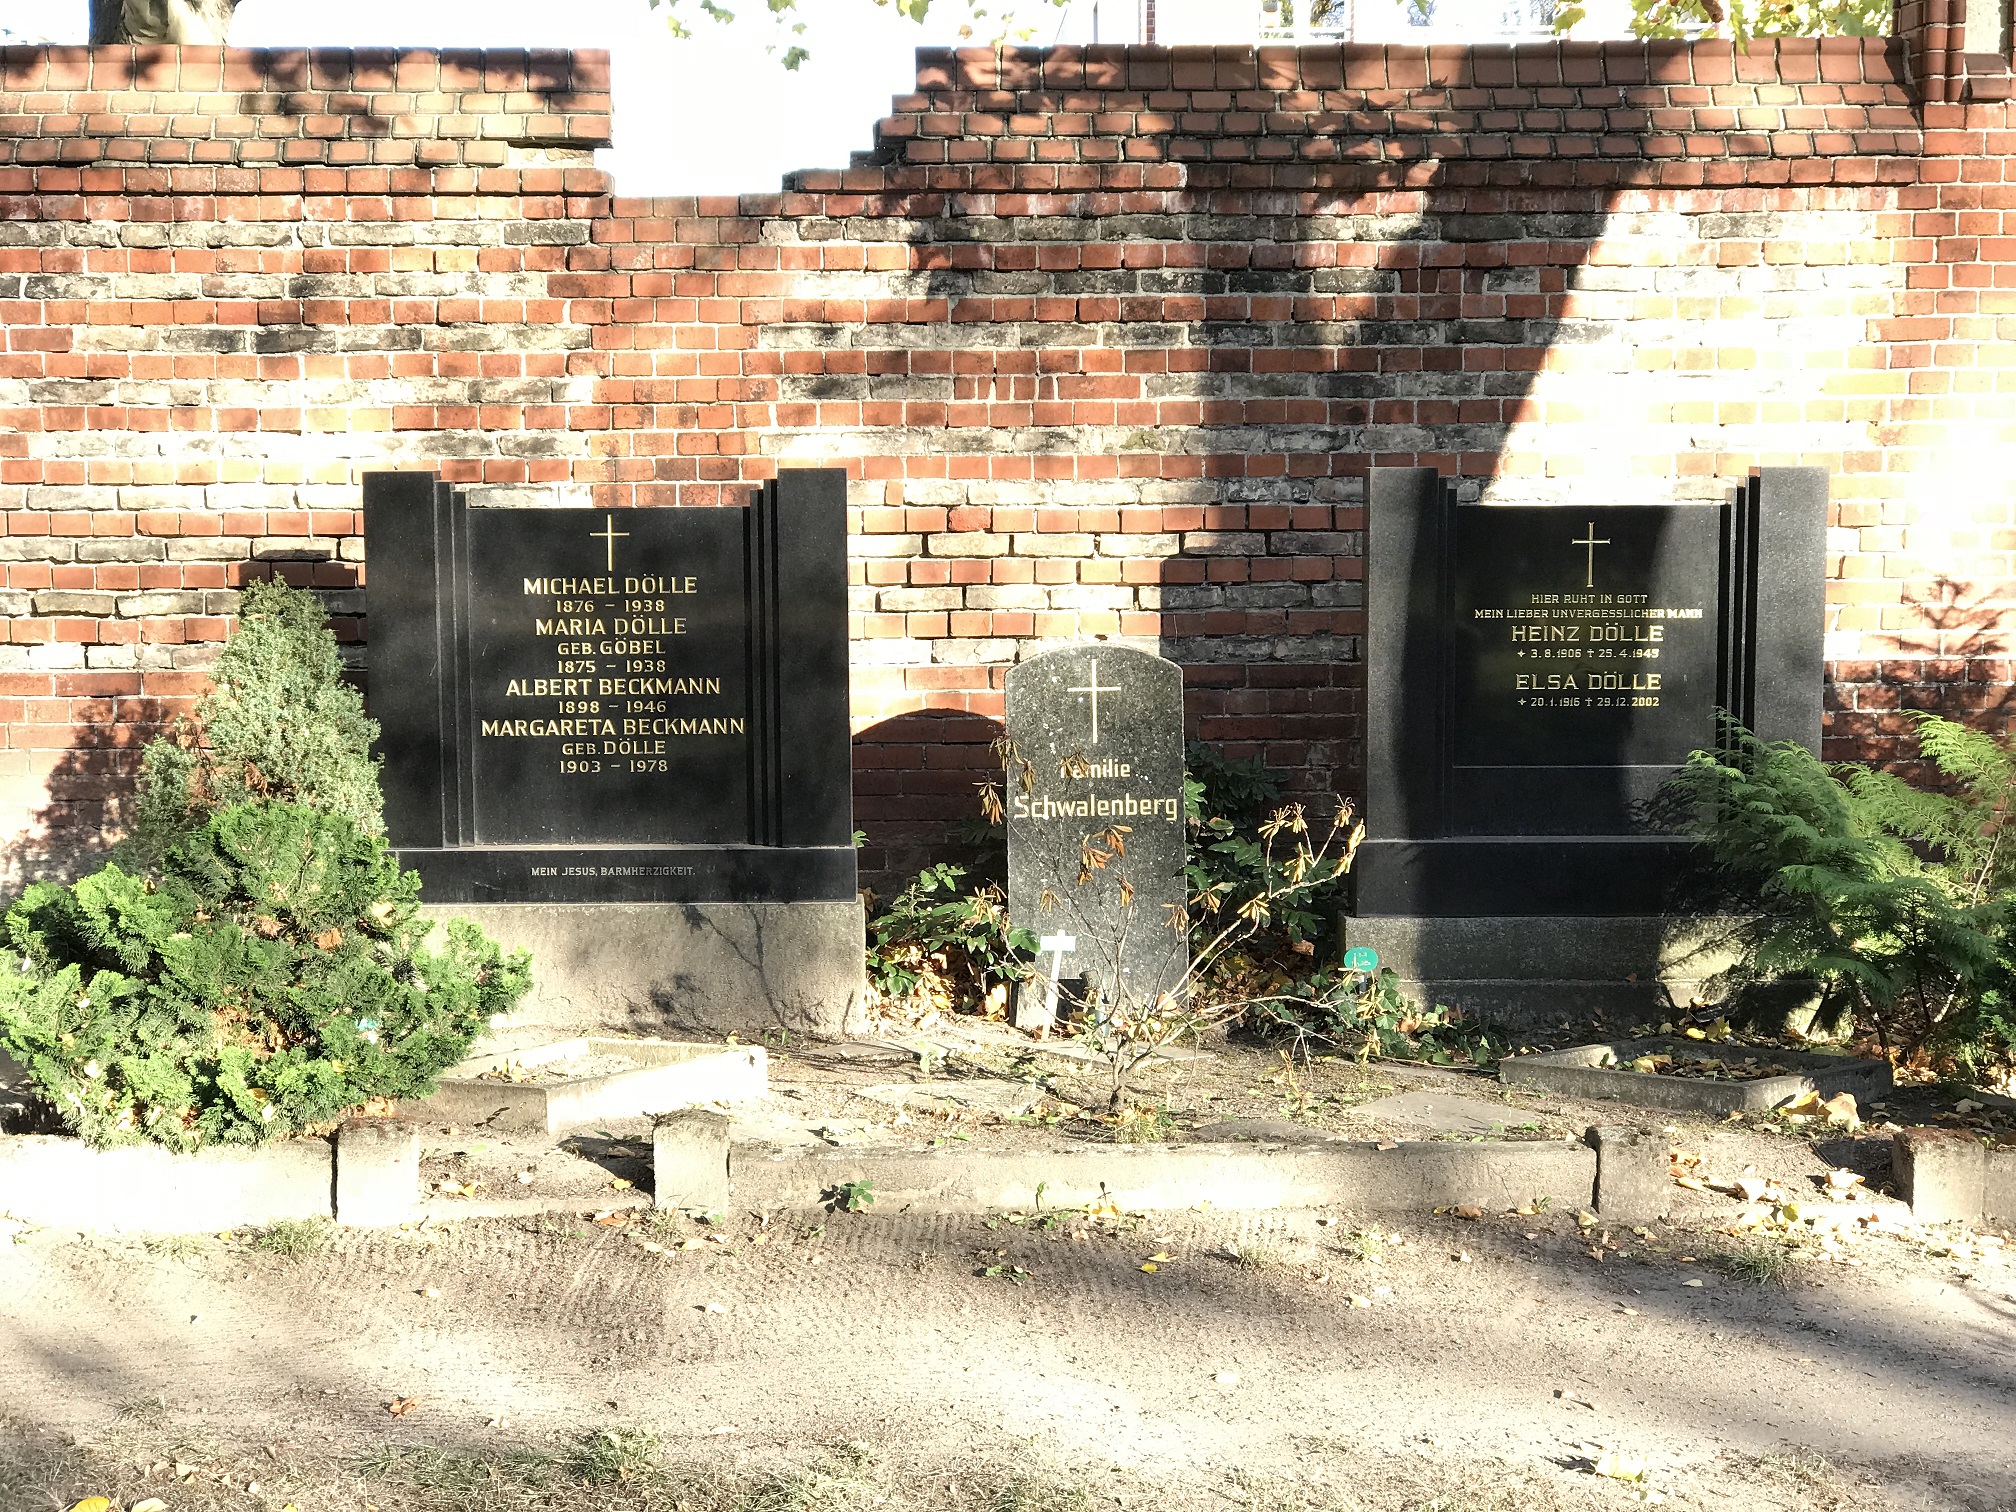 Grabstein Heinz Dölle, St. Hedwigs-Friedhof, Berlin-Weißensee